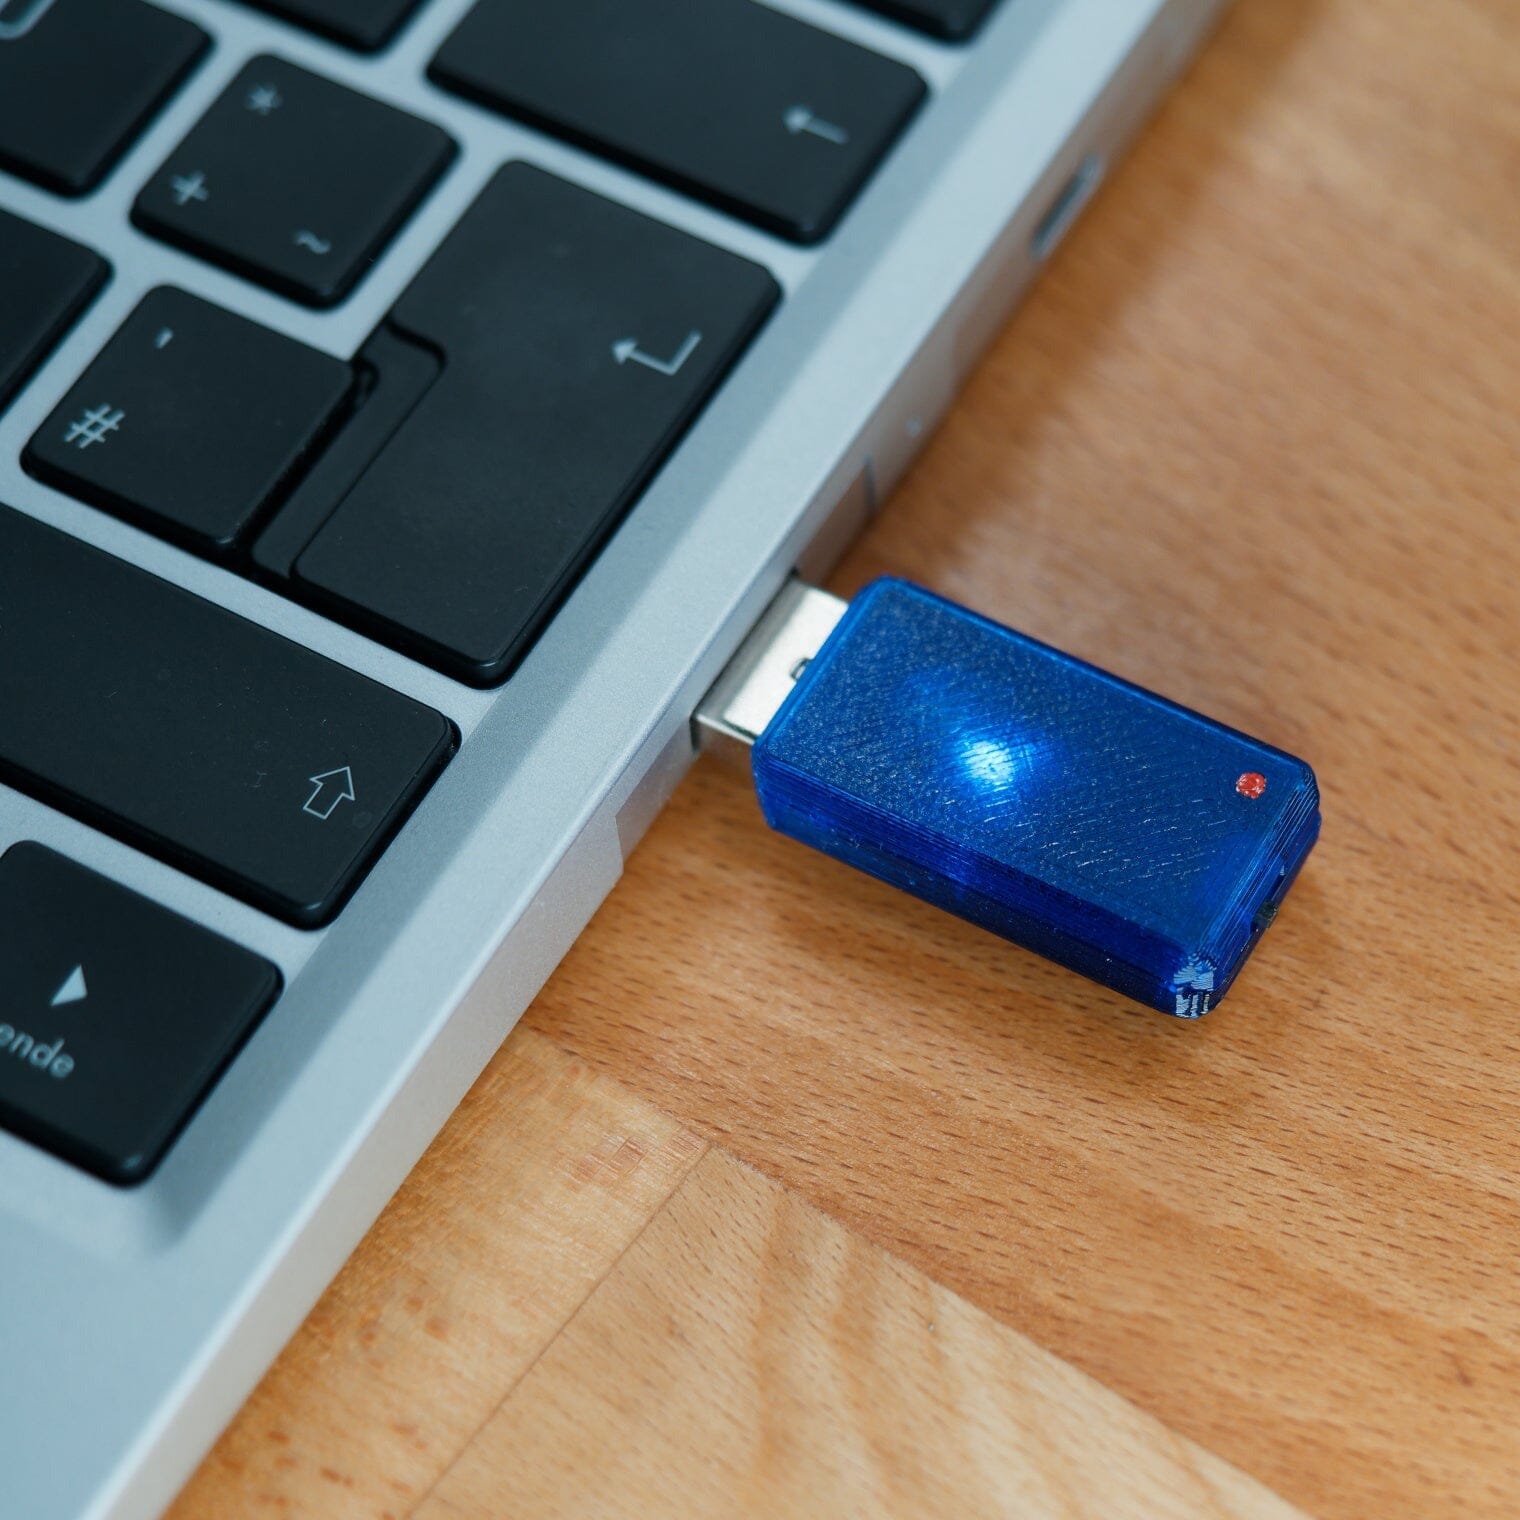 USB Nova with blue case plugged into Framework laptop